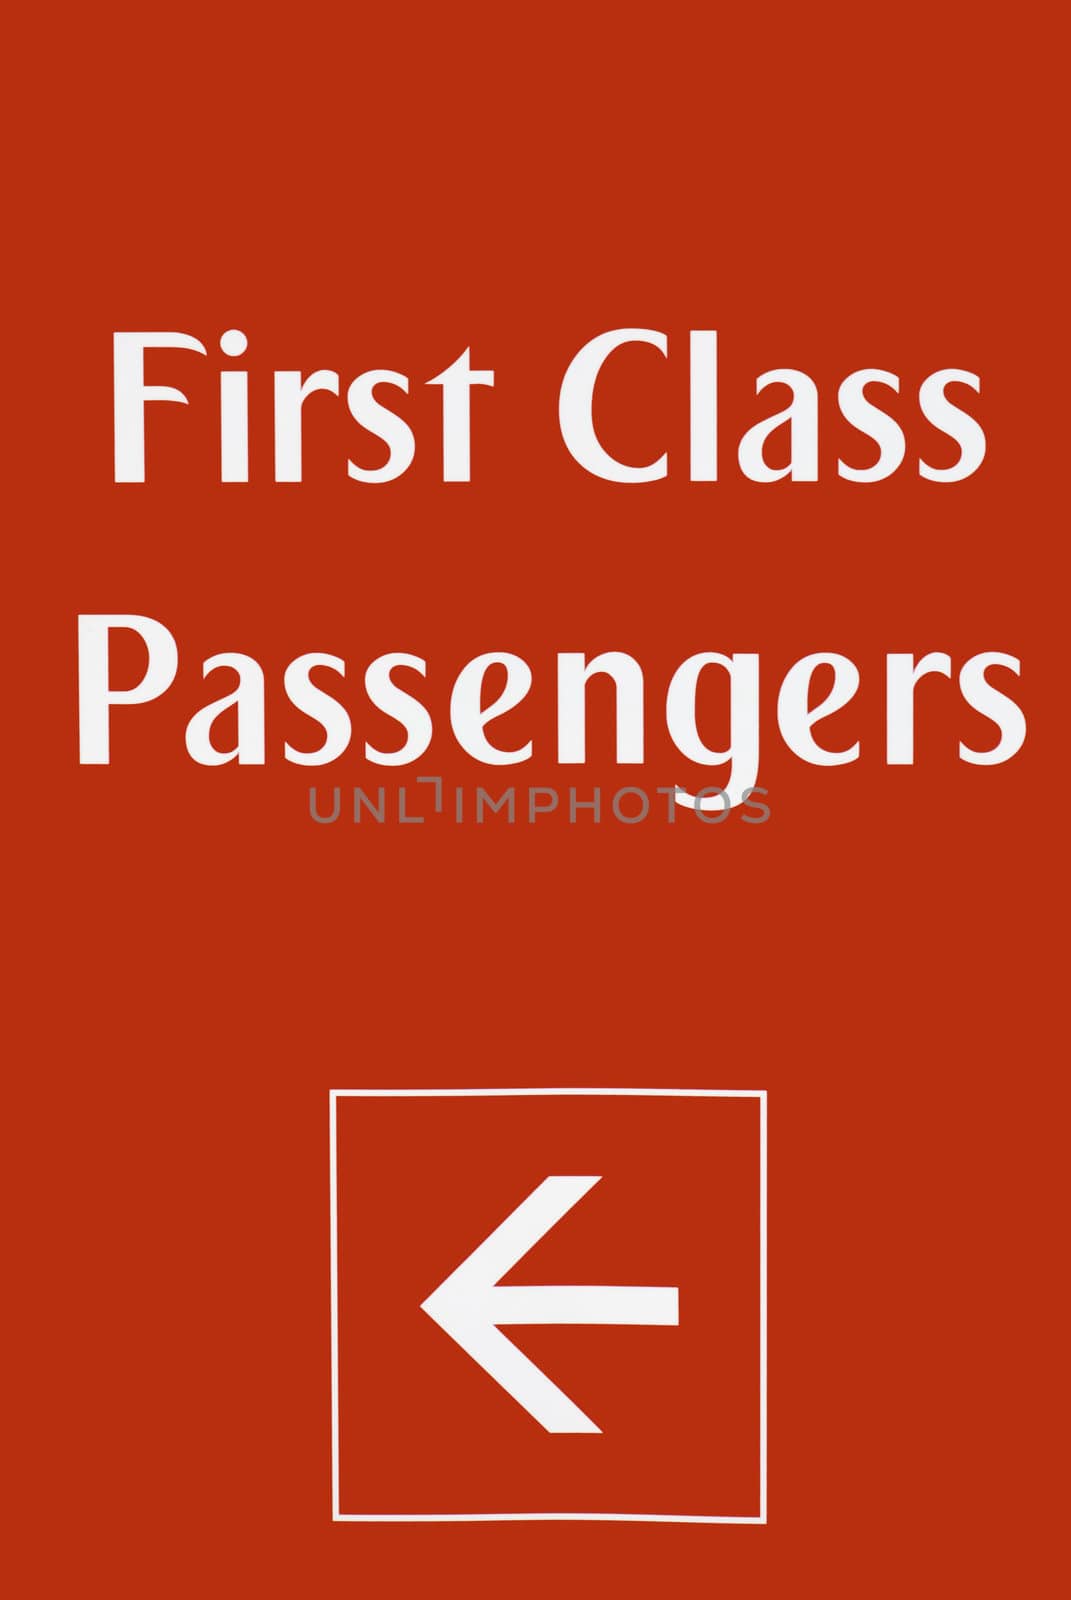 First class sign board by sasilsolutions